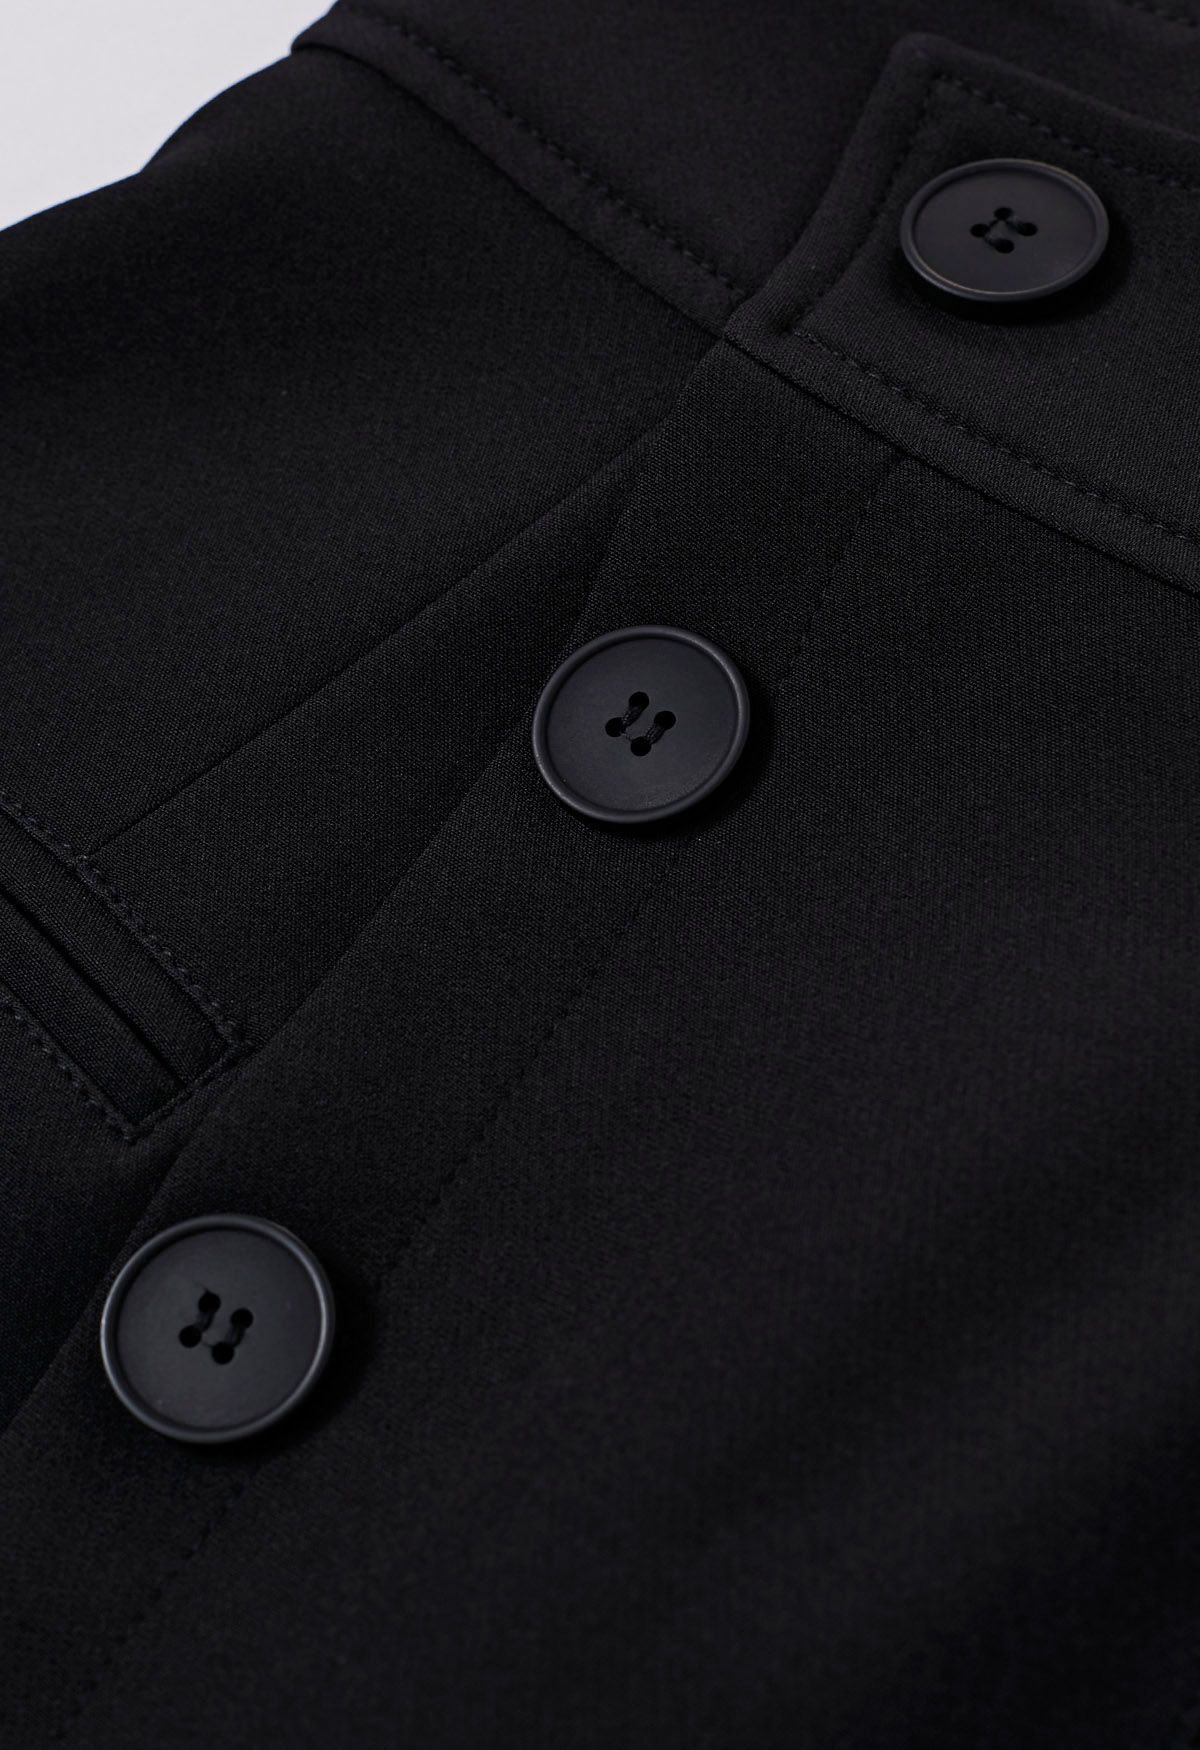 Asymmetric Buttoned Flap Mini Skirt in Black